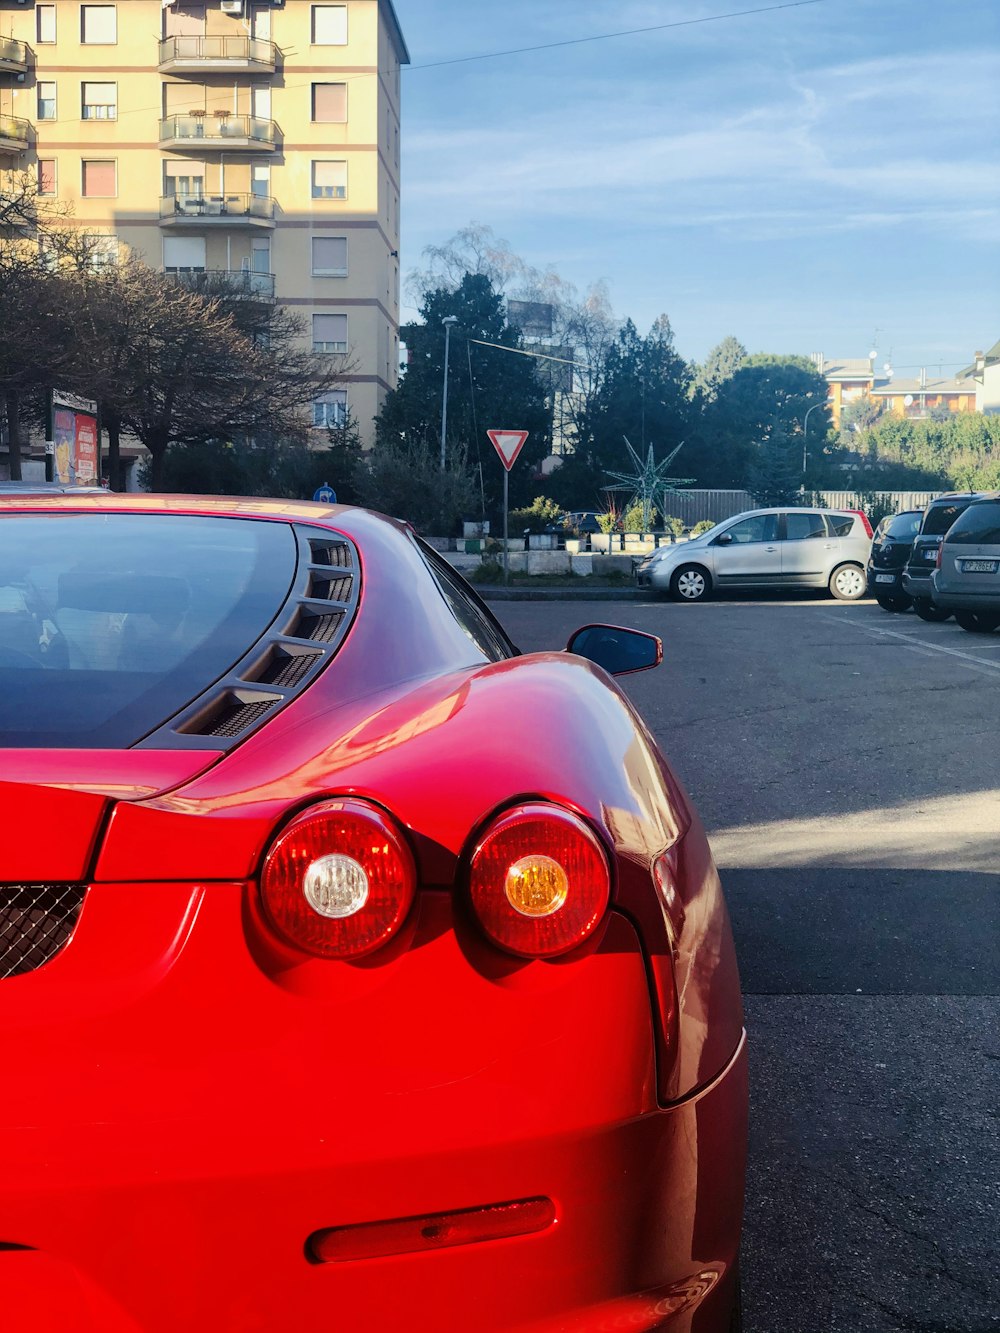 red ferrari car on road during daytime